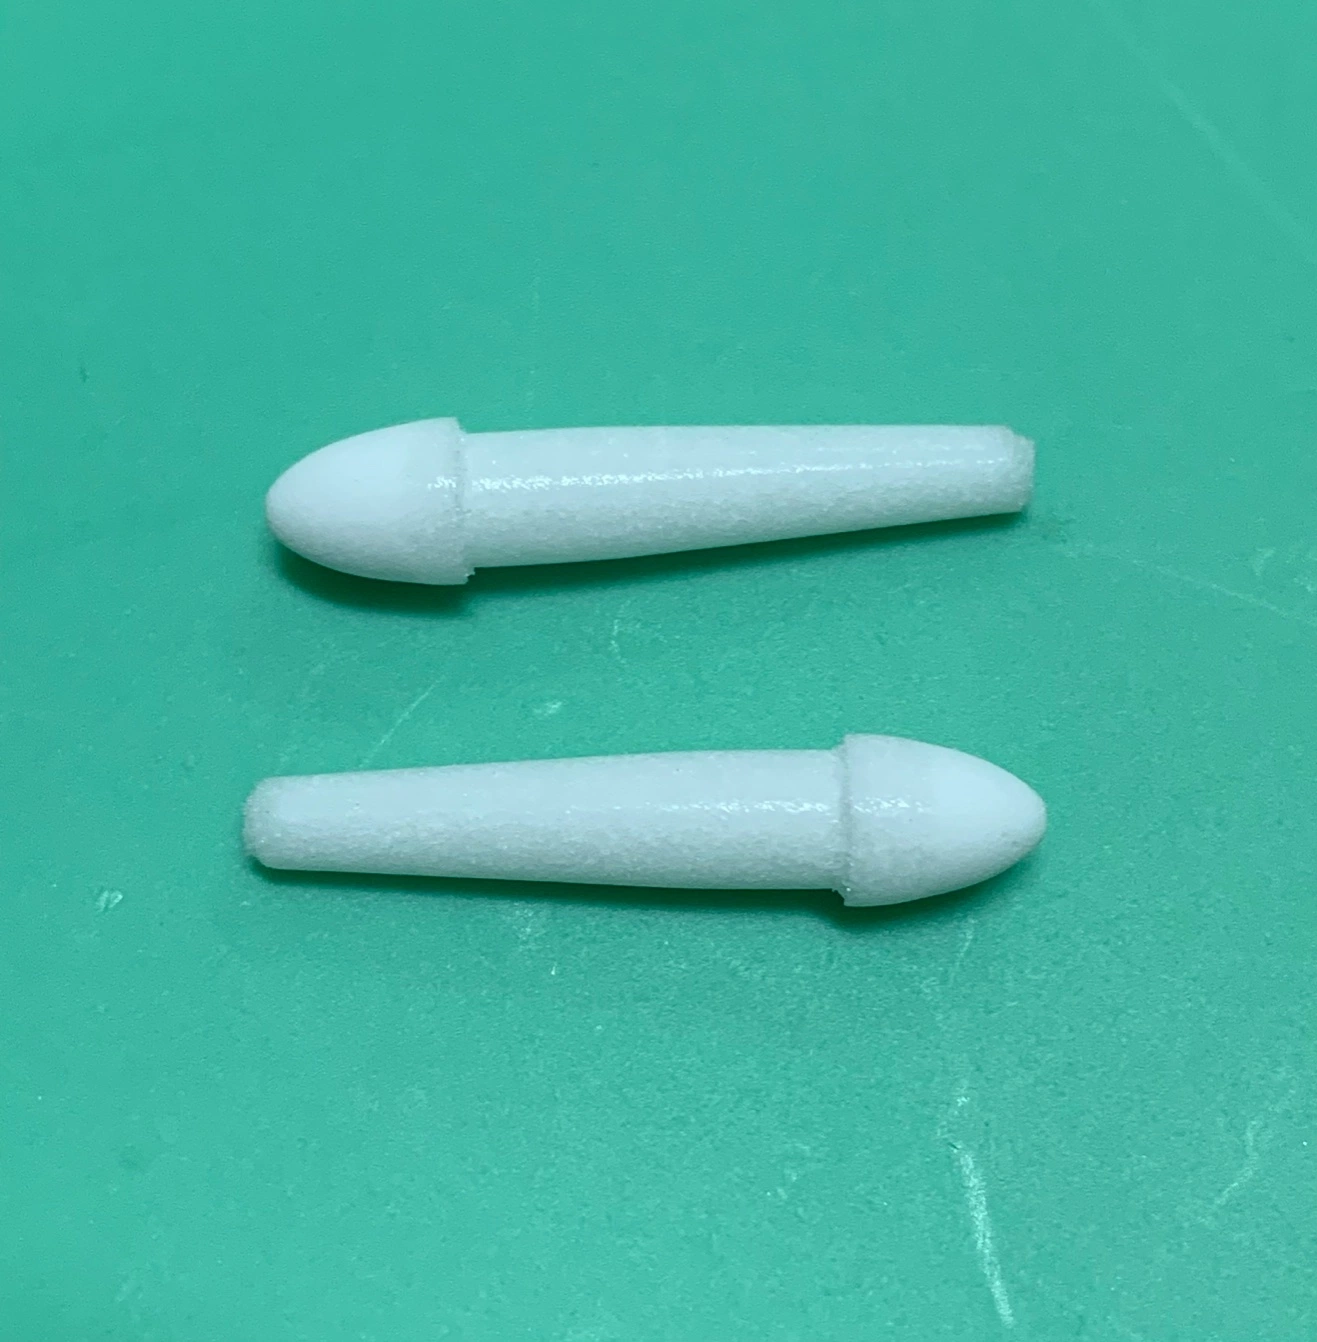 Highlighter Nibs (Bullet-shaped) Pen for Office Supply